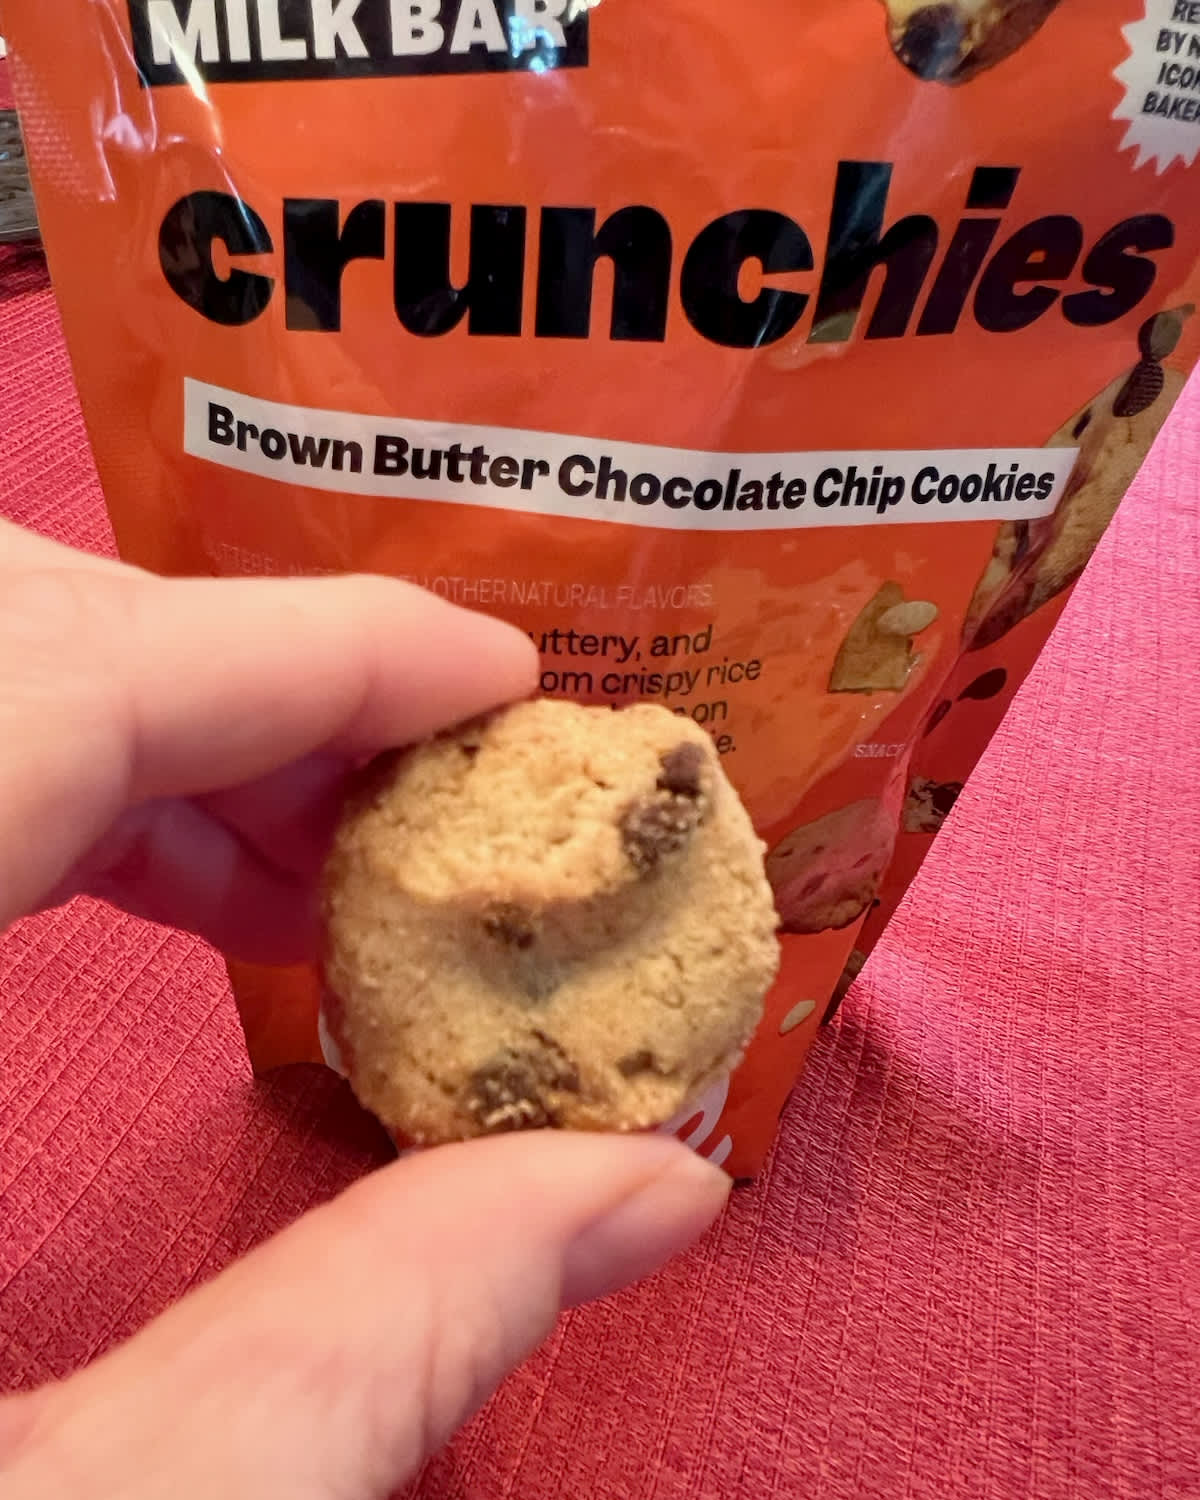 Milk Bar Crunchies Cookies Review